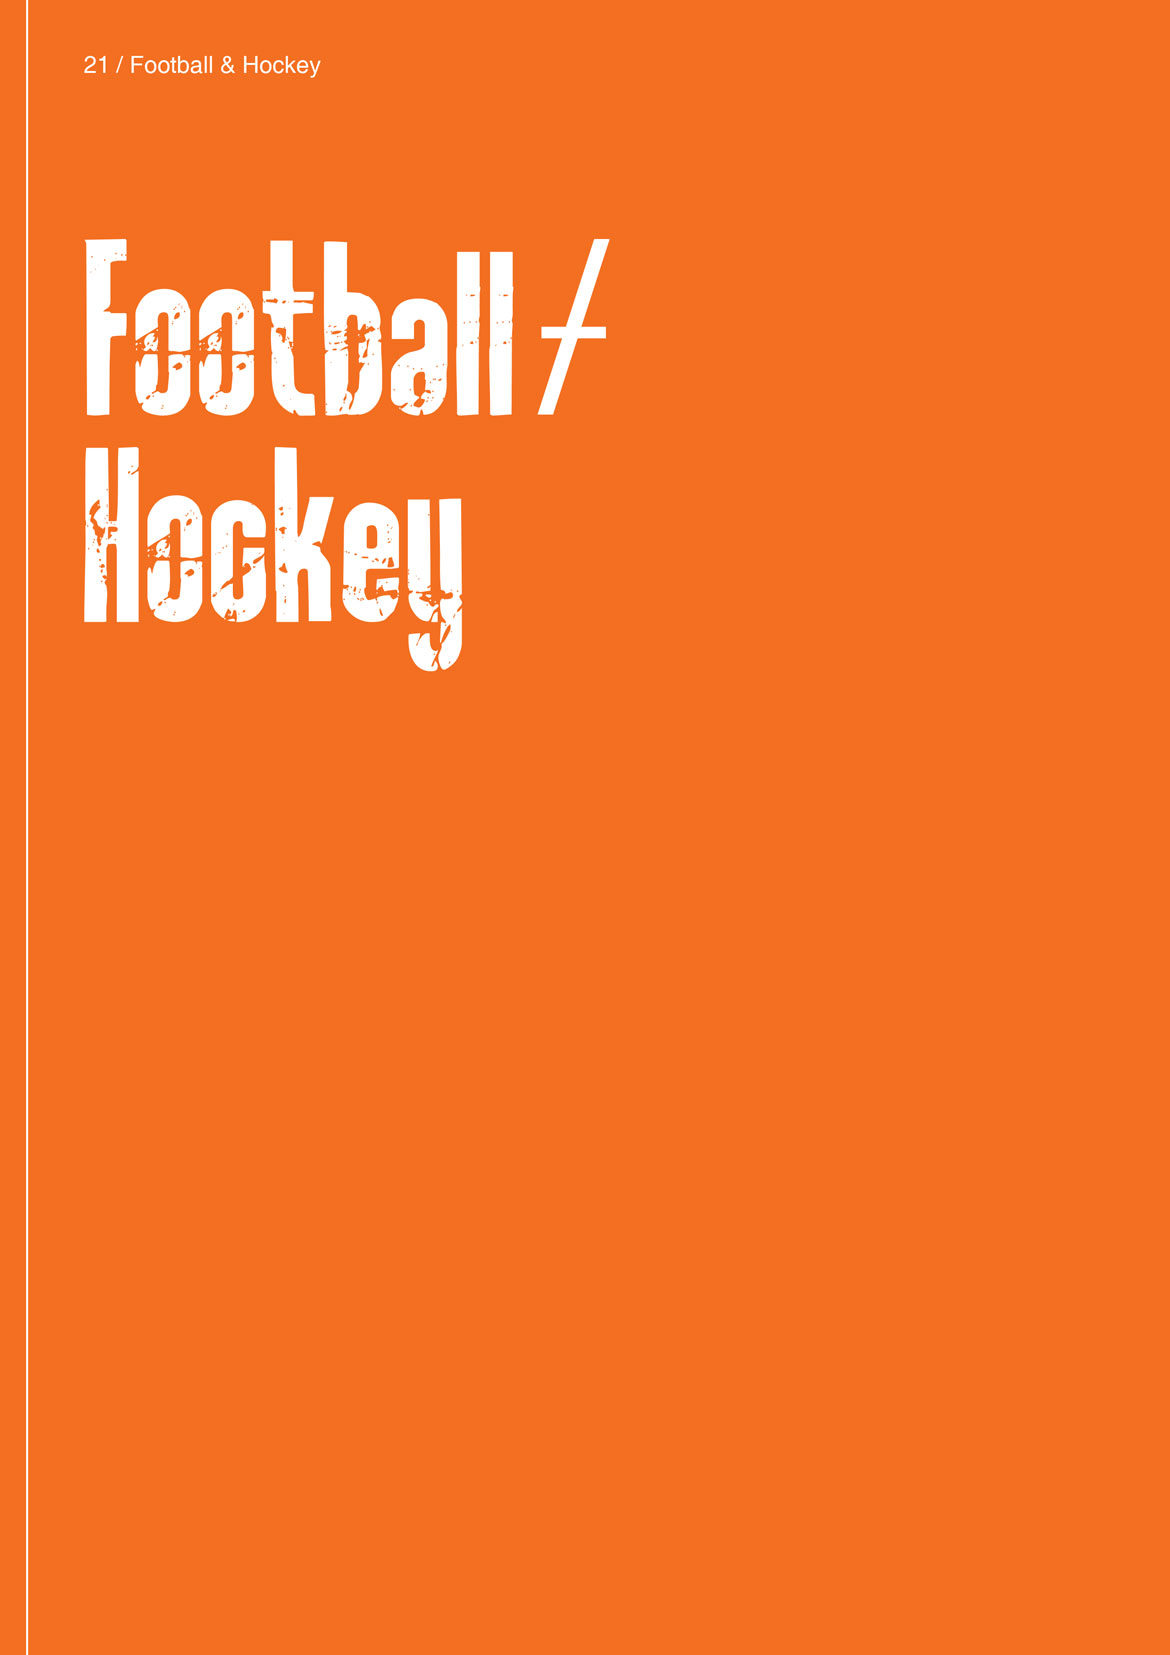 Football/Hockey Apparel